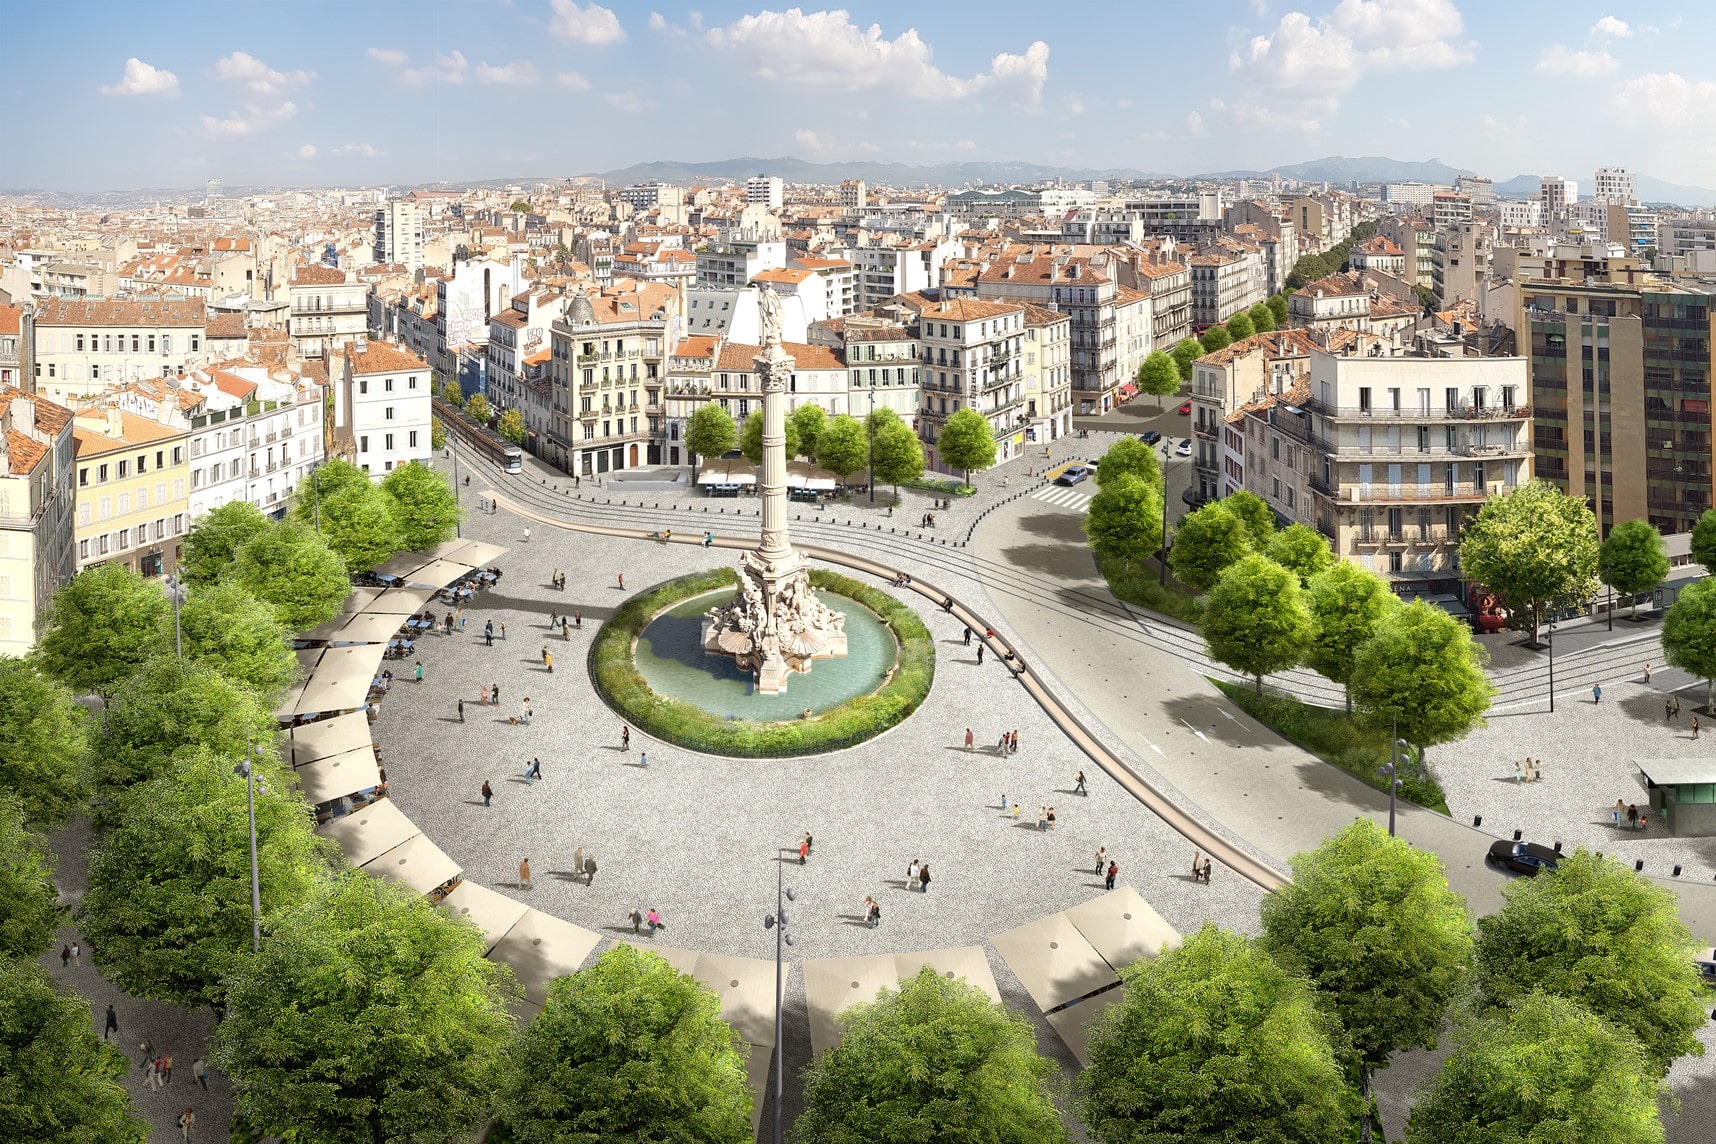 extension, Le projet de tramway Nord-Sud de Marseille remporte un prix international, Made in Marseille